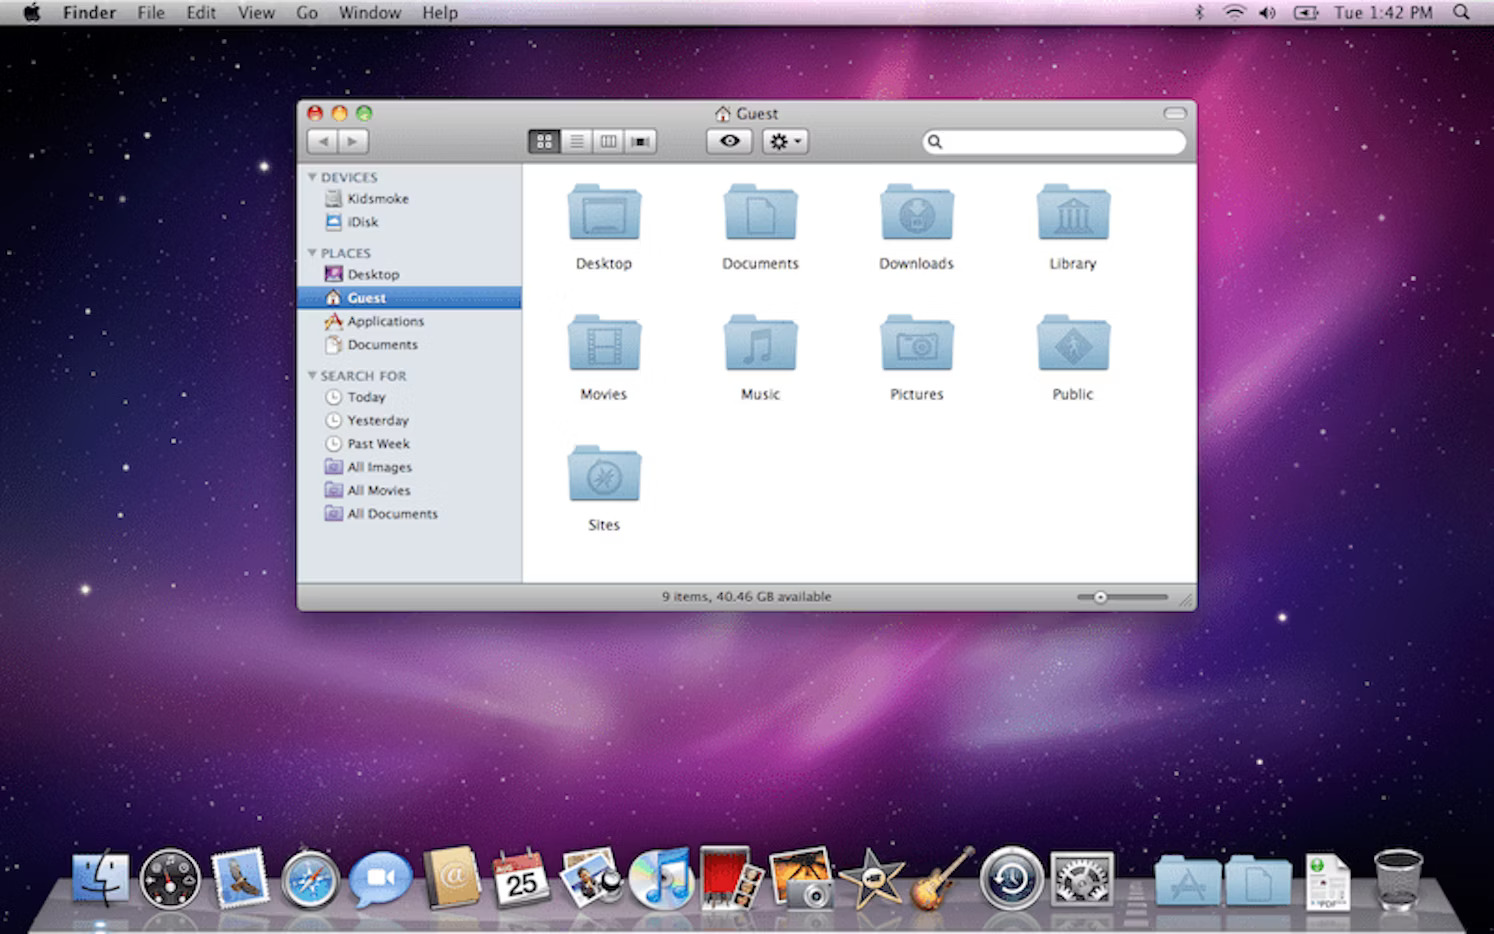 OS X 10.6 "Snow Leopard" (2009)